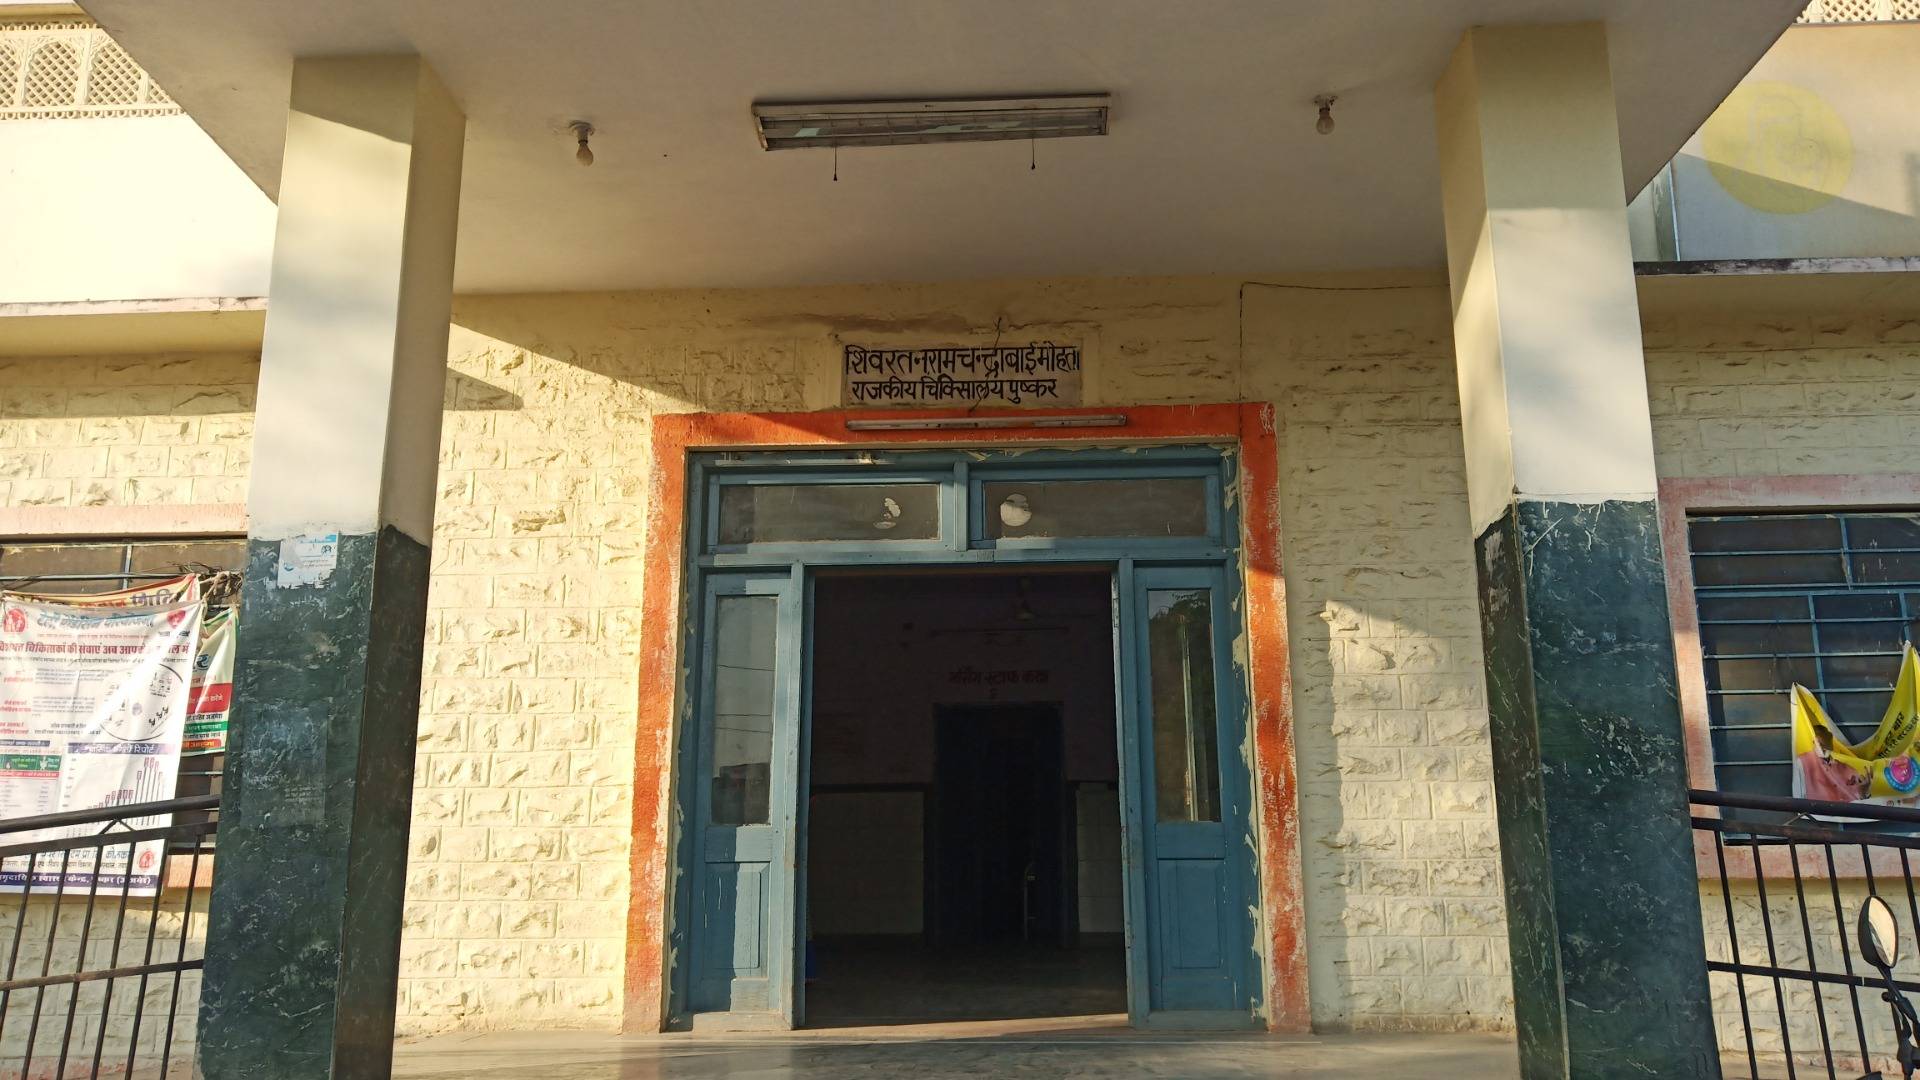 Pushkar Community Hospital looks old but it was clean